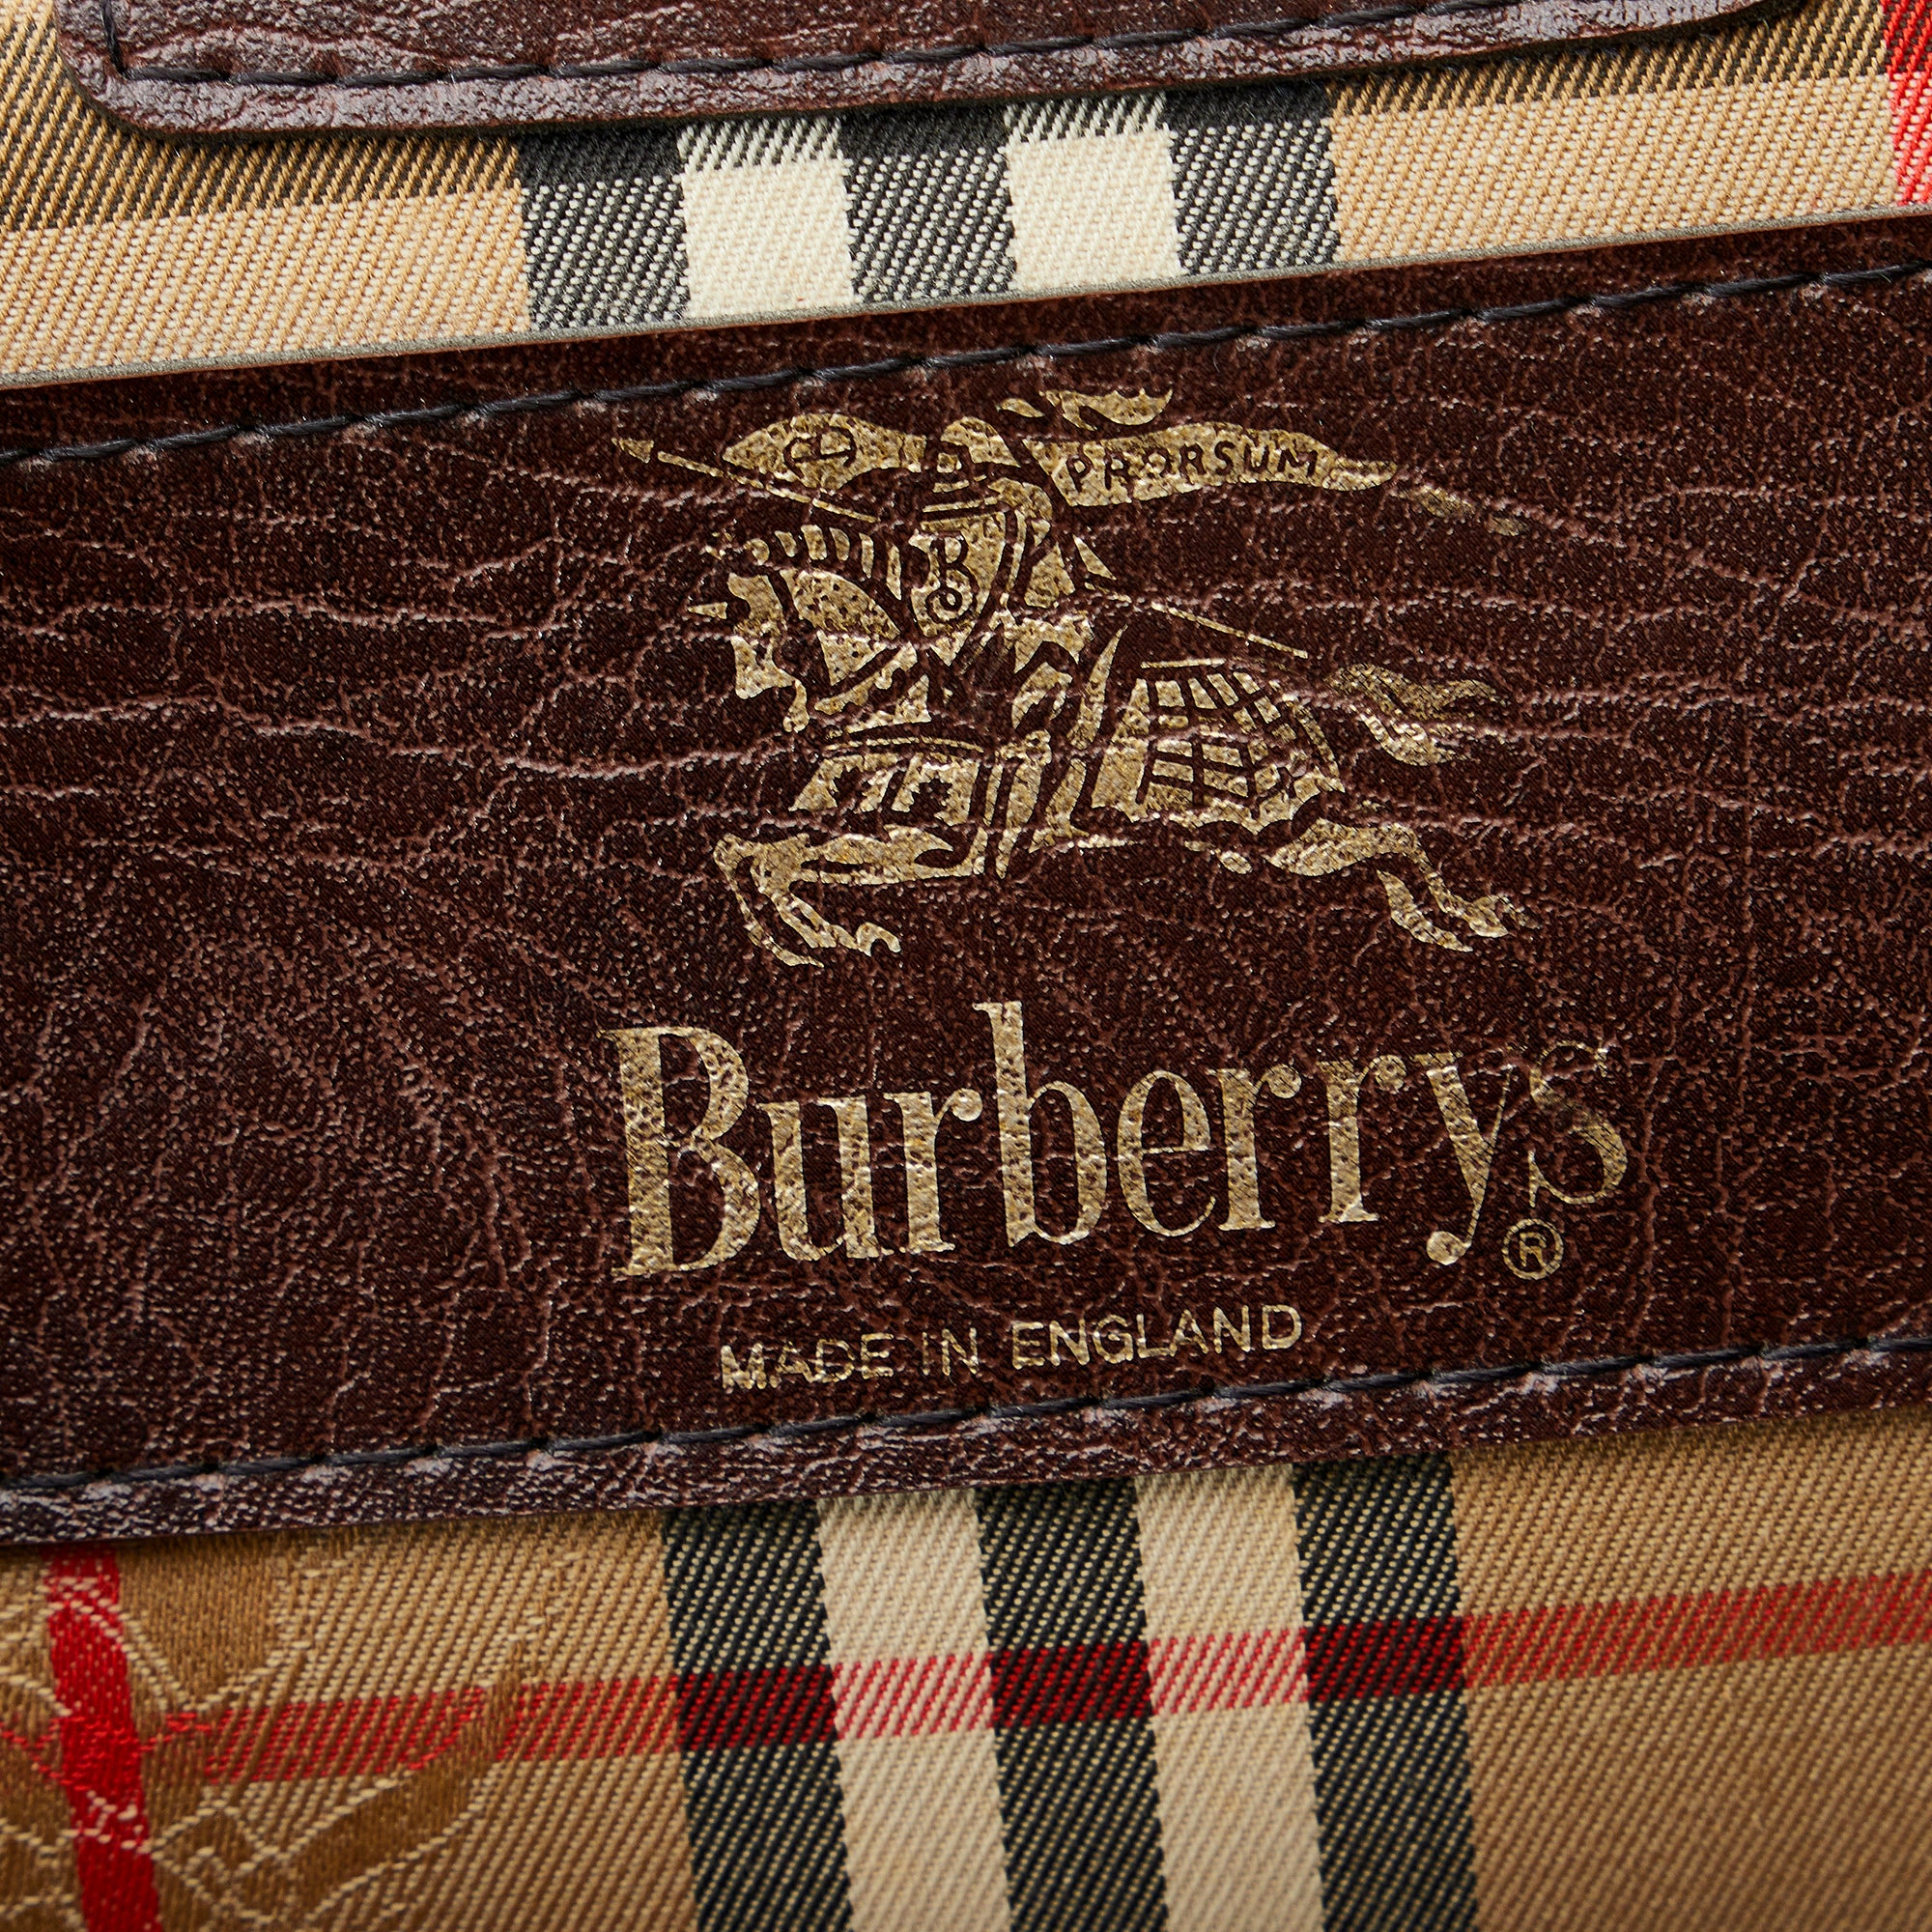 Brown Burberry Haymarket Check Travel Bag – Designer Revival